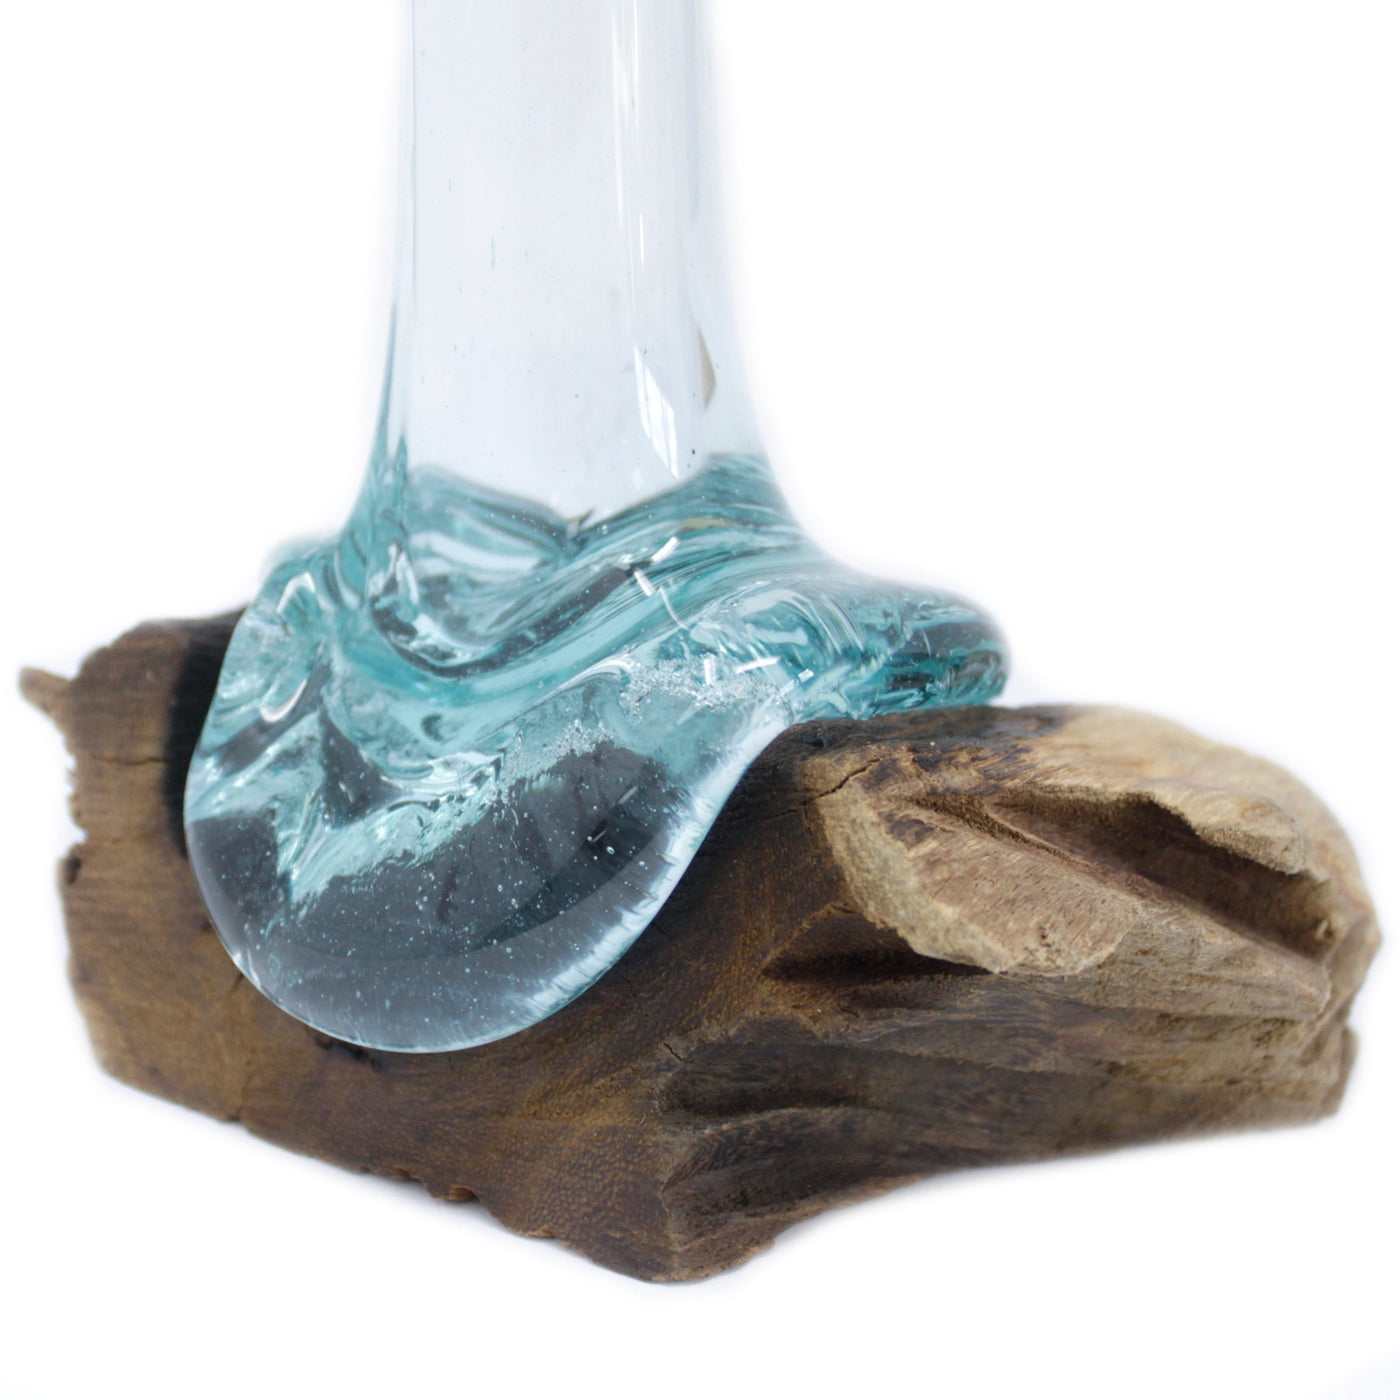 Natural Handmade Melted Glass On Wood Vase.